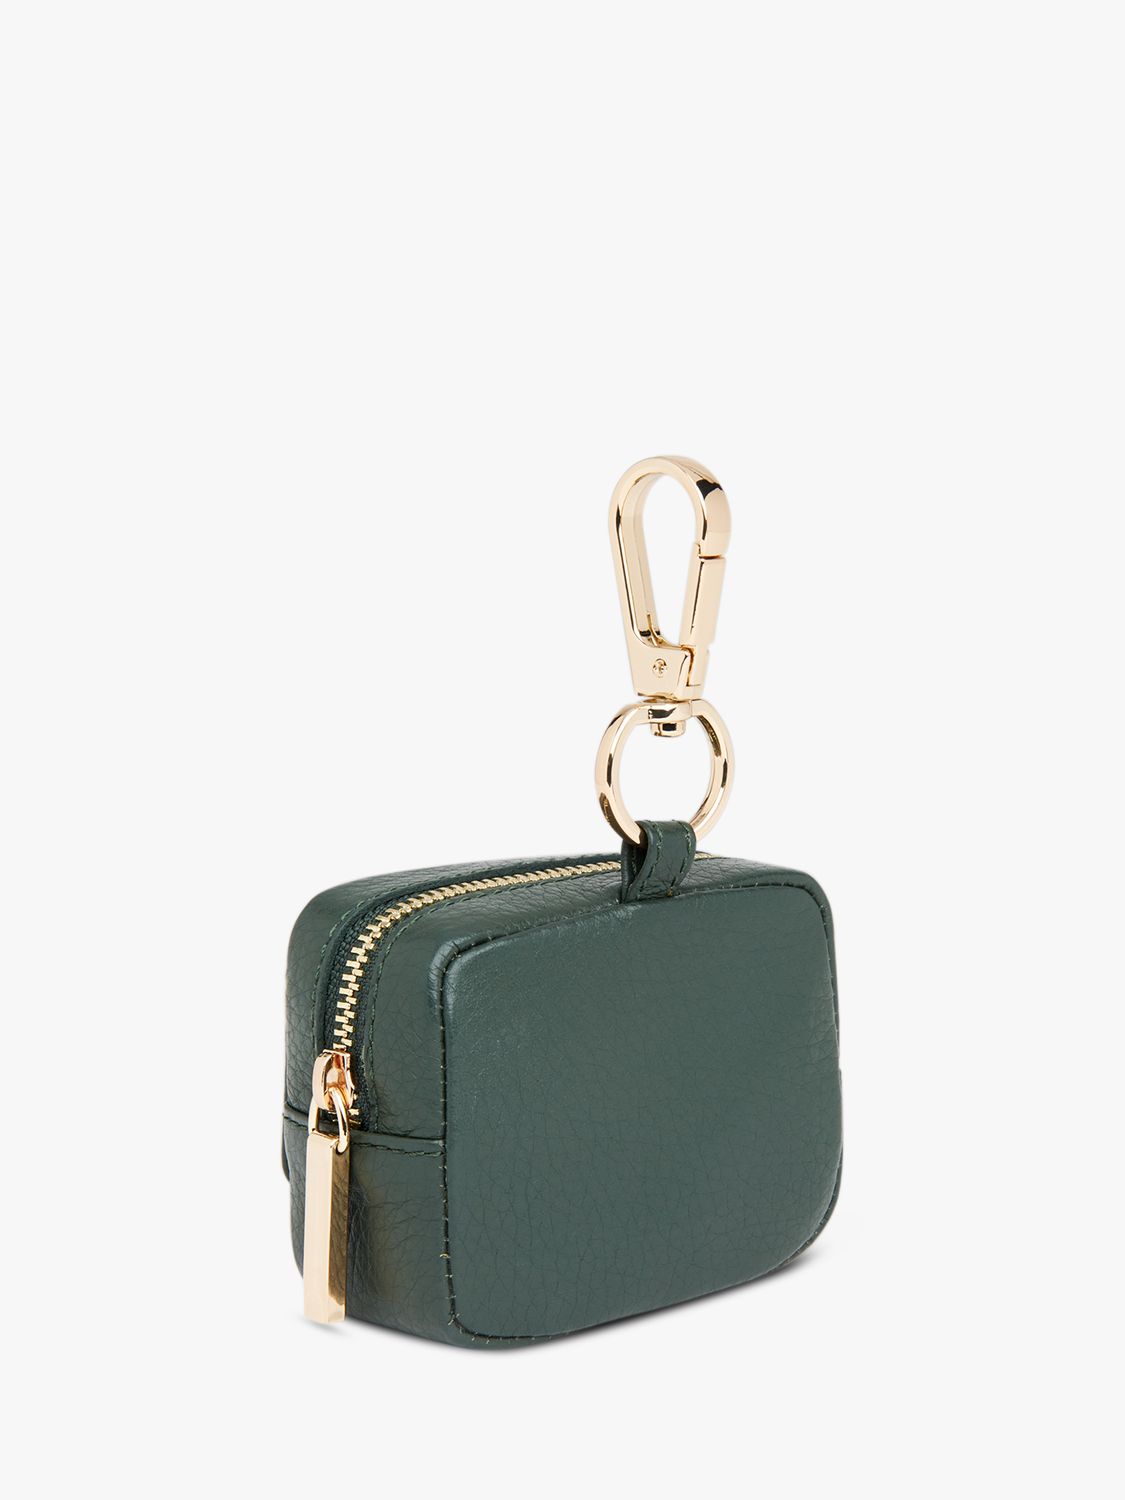 Whistles Bibi Mini Keyring Bag, Green, One Size